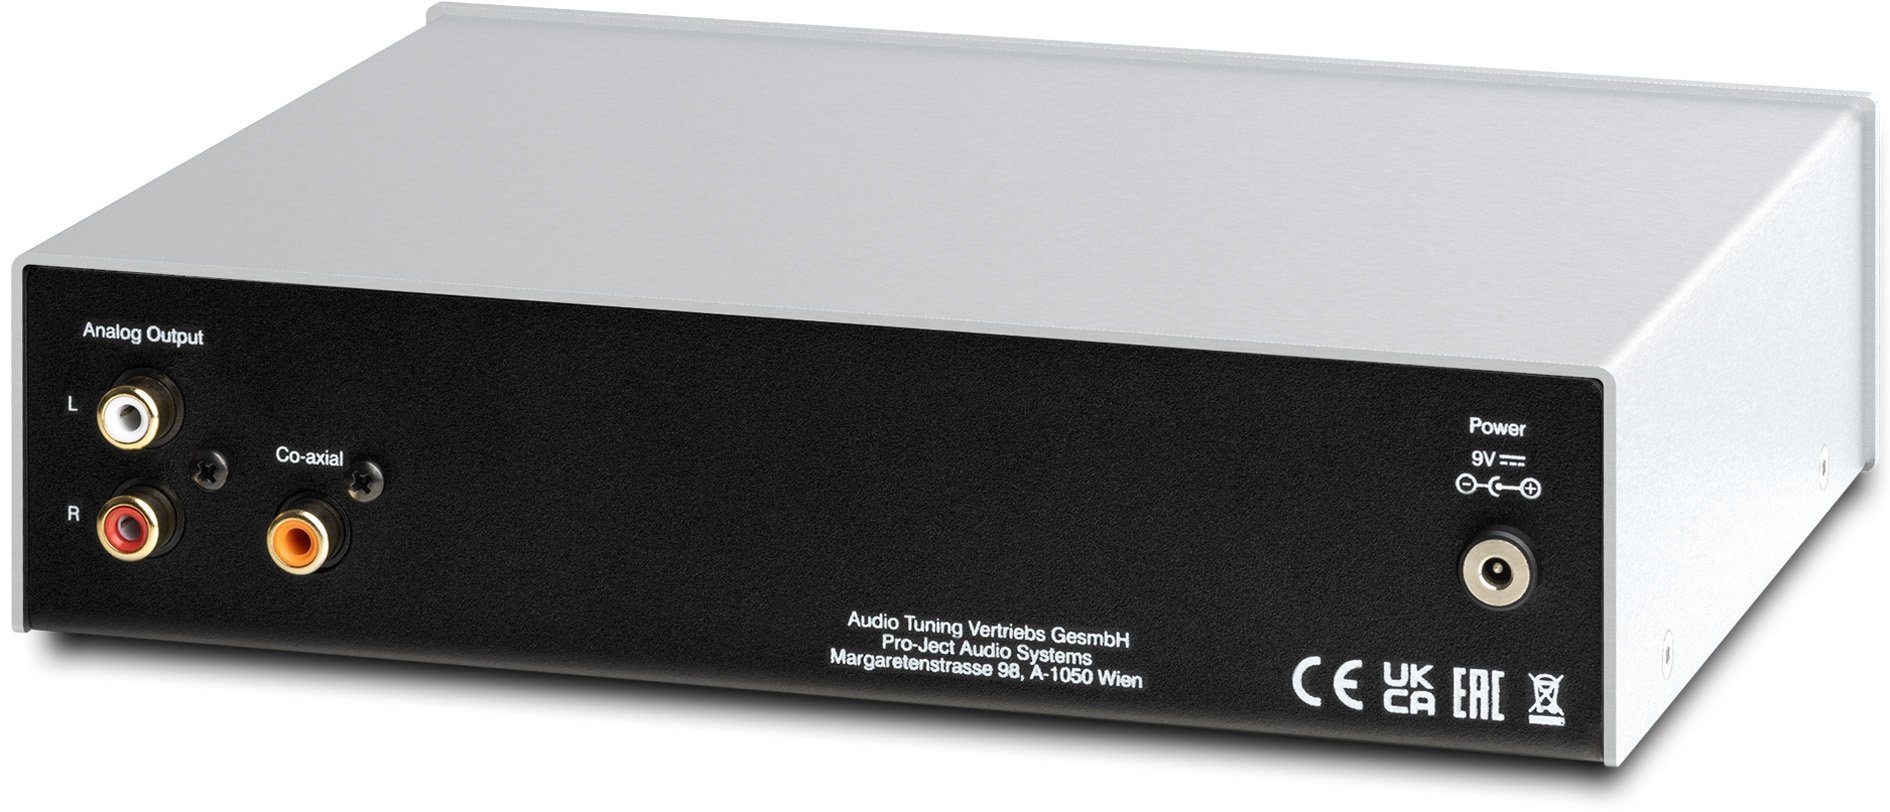 Player CD Schwarz Stereo-CD flacher Box S3 Pro-Ject Ultra kompakter